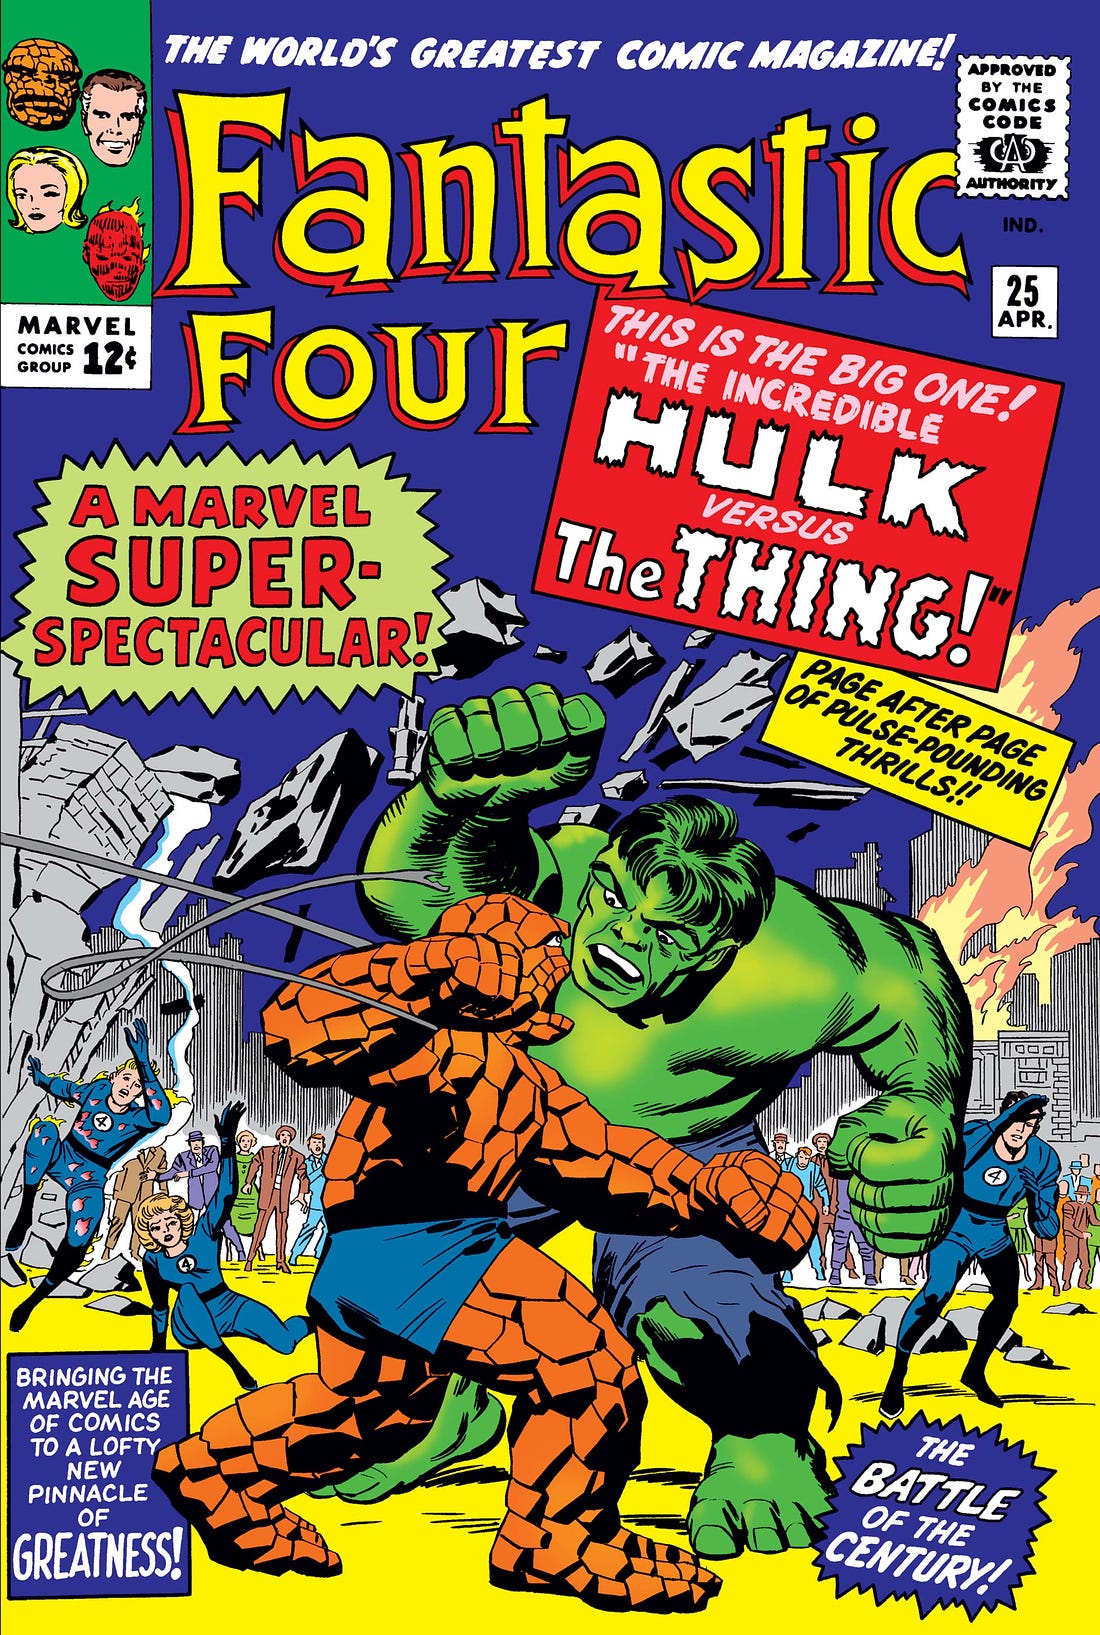 Fantastic Four (1961) #25 | Comic Issues | Marvel